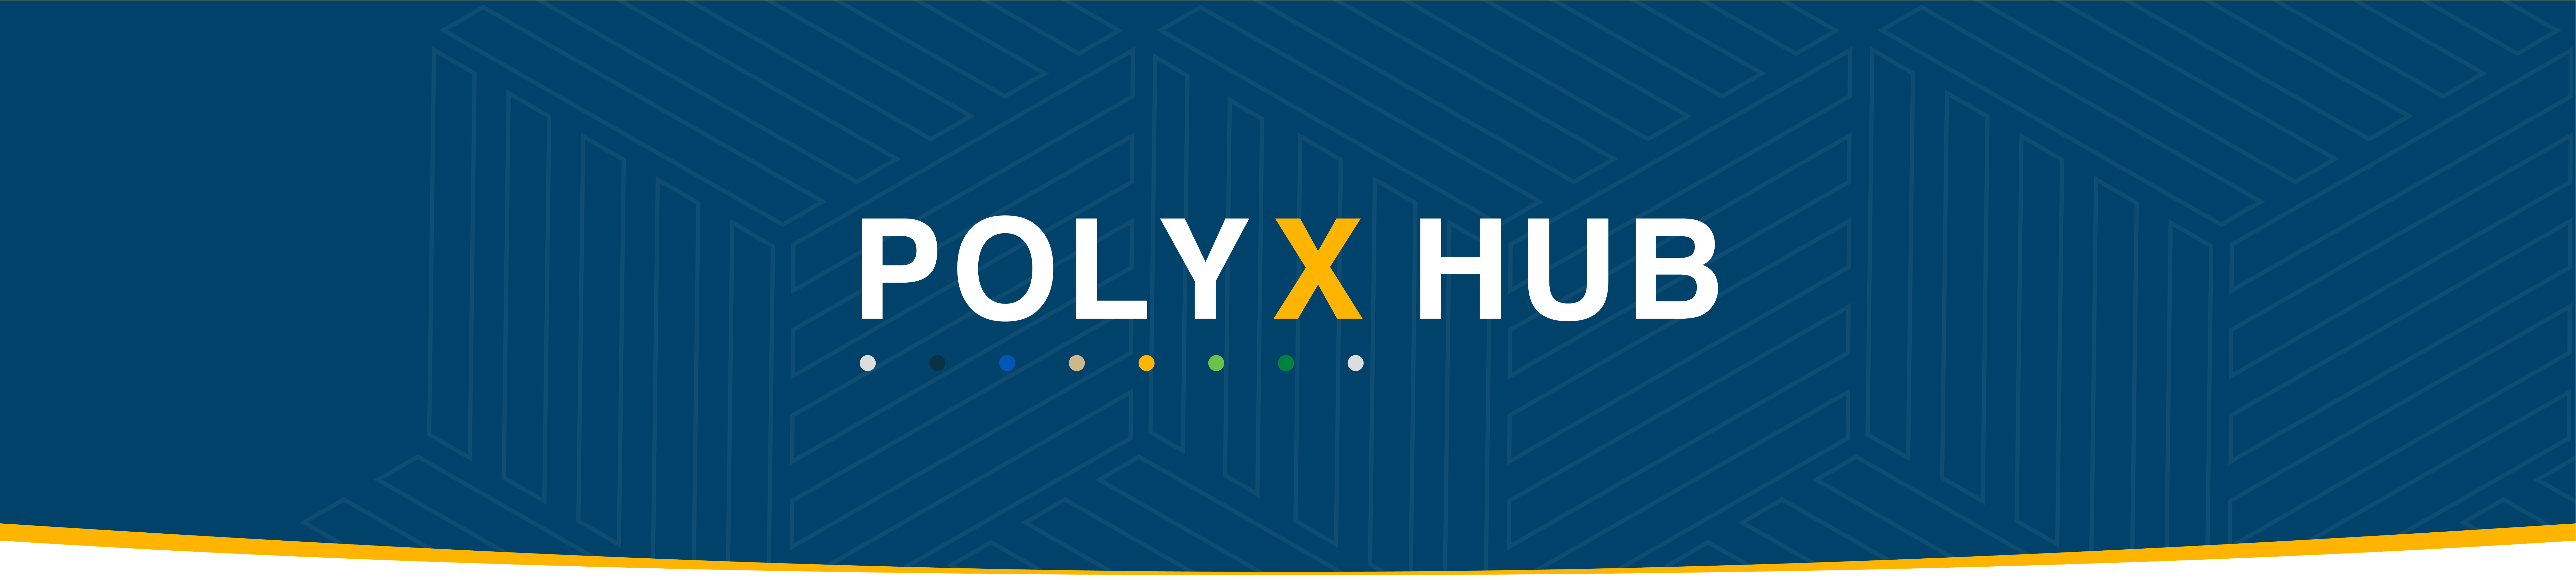 PolyX Hub